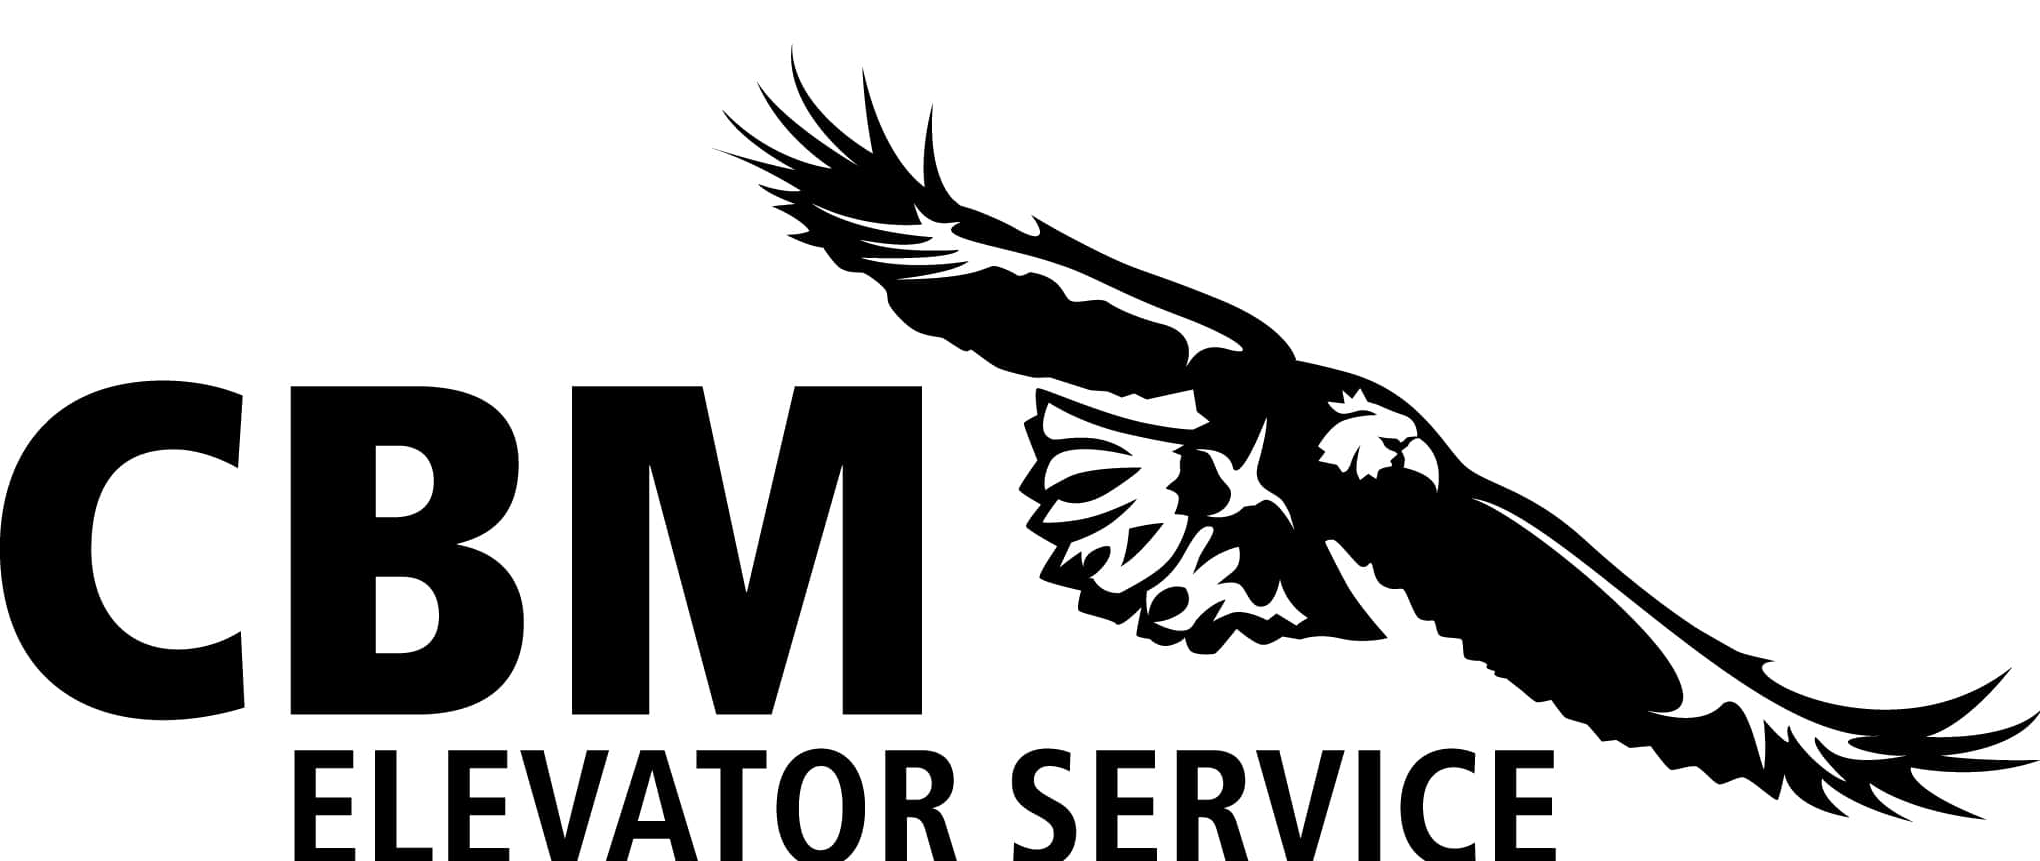 cbm-elevator-service-full-logo-min.png